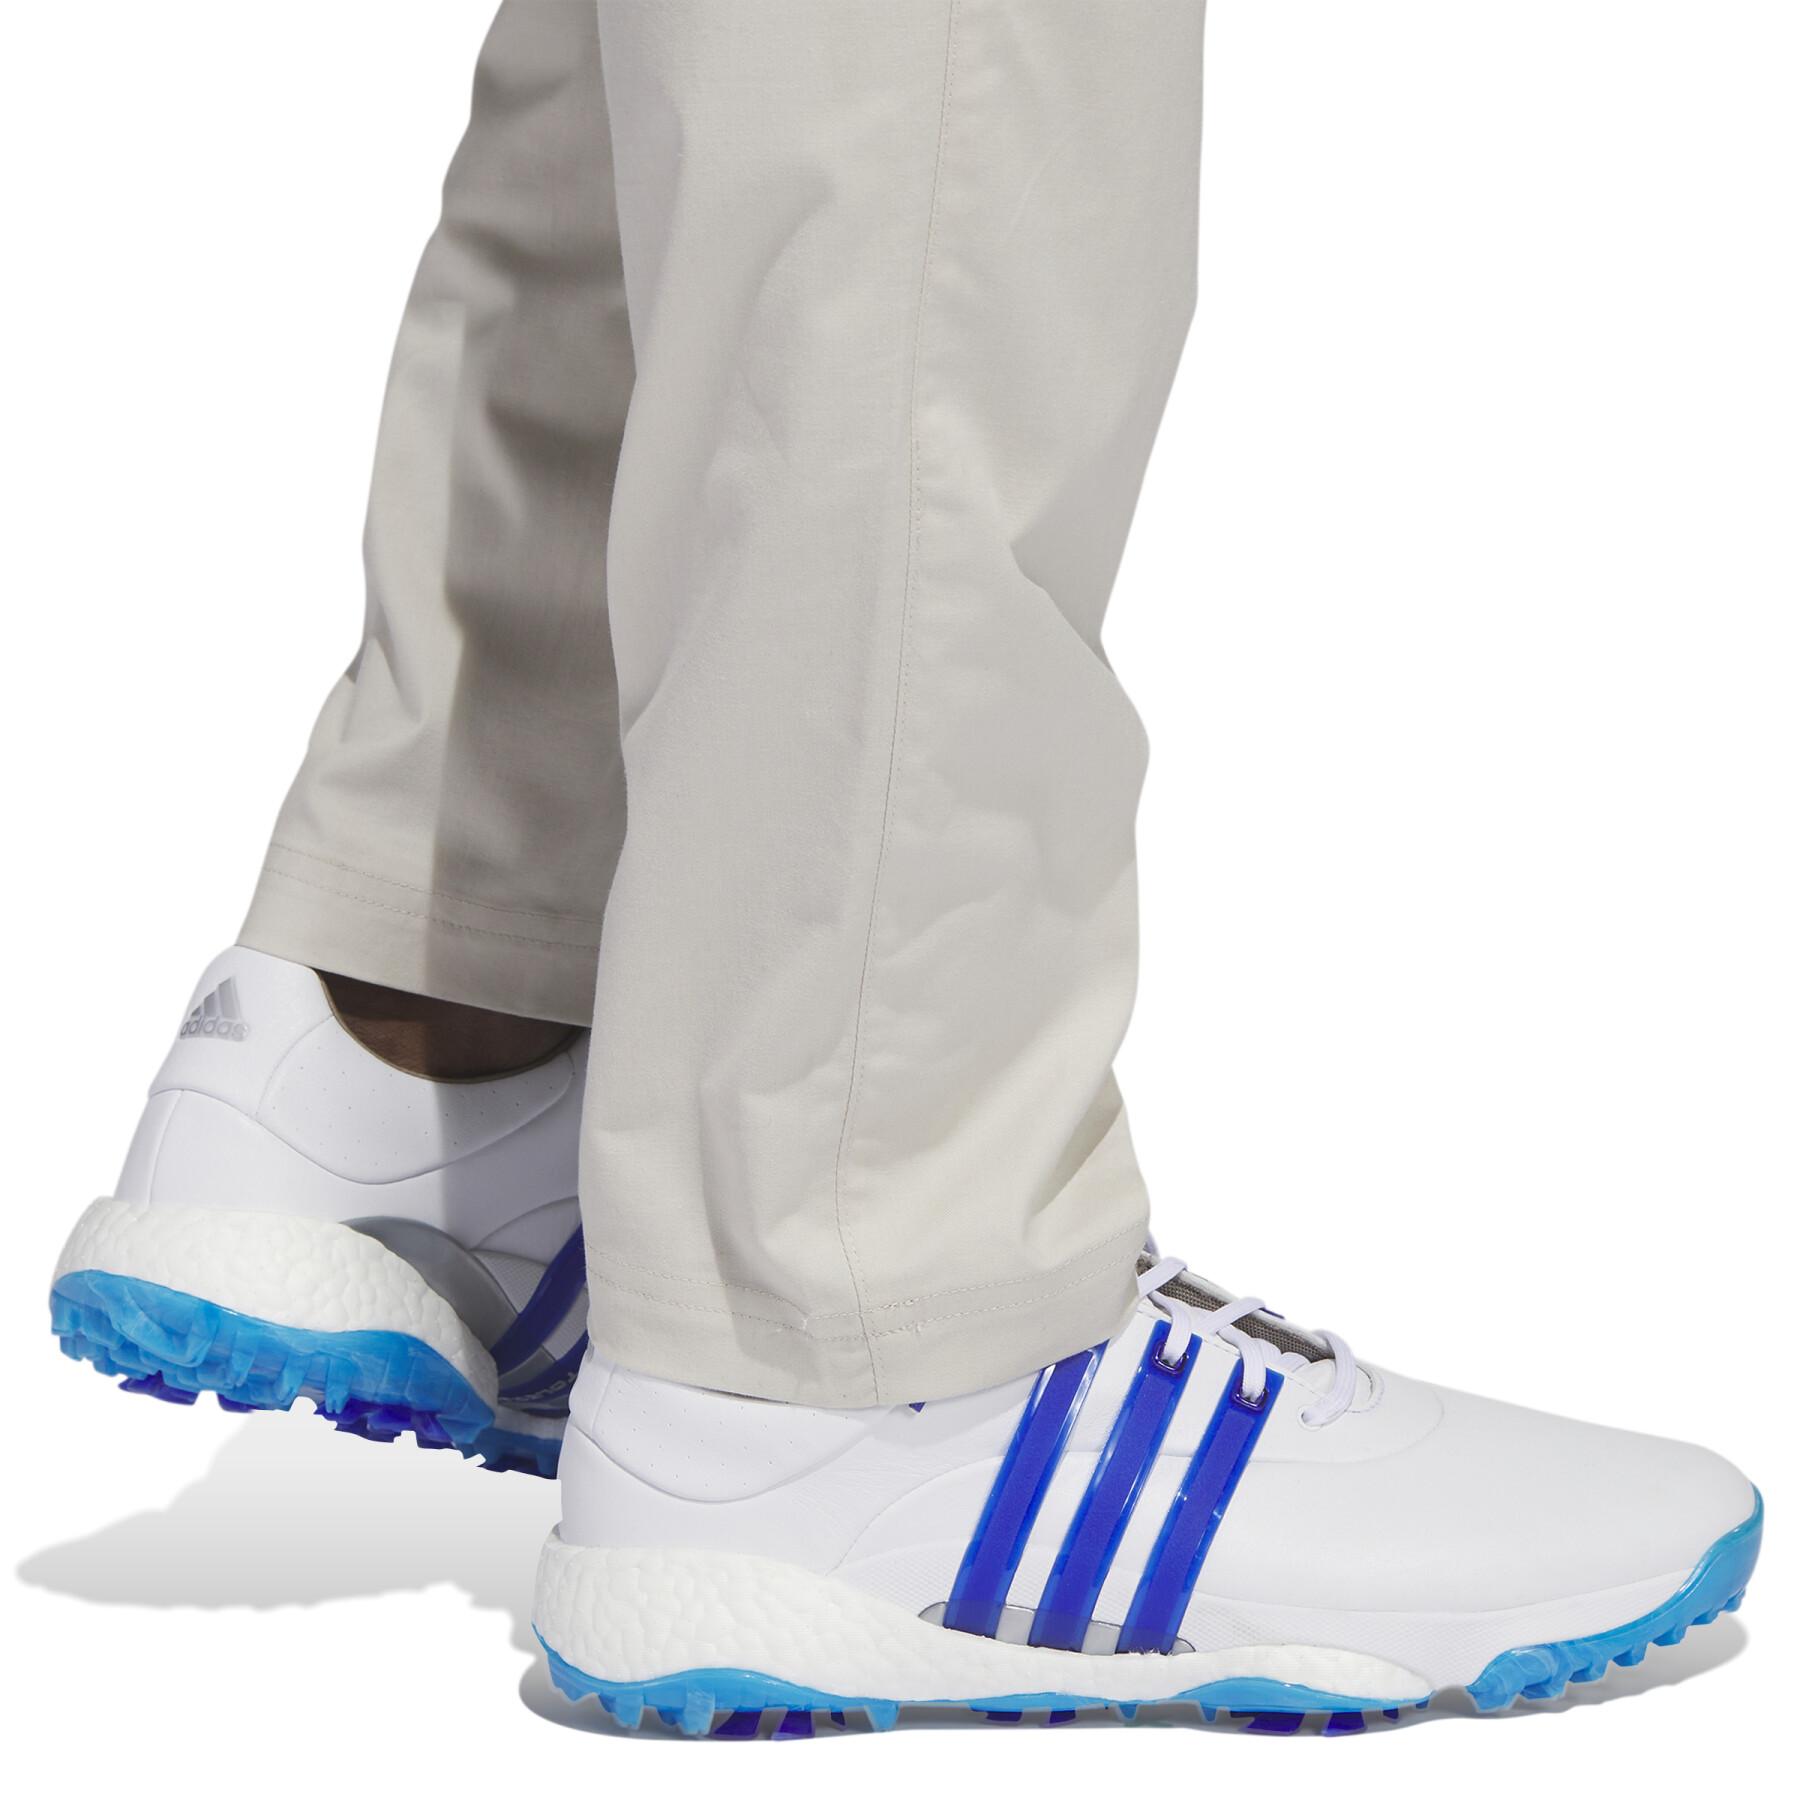 Pantaloni da golf adidas Go-To 5-Pocket